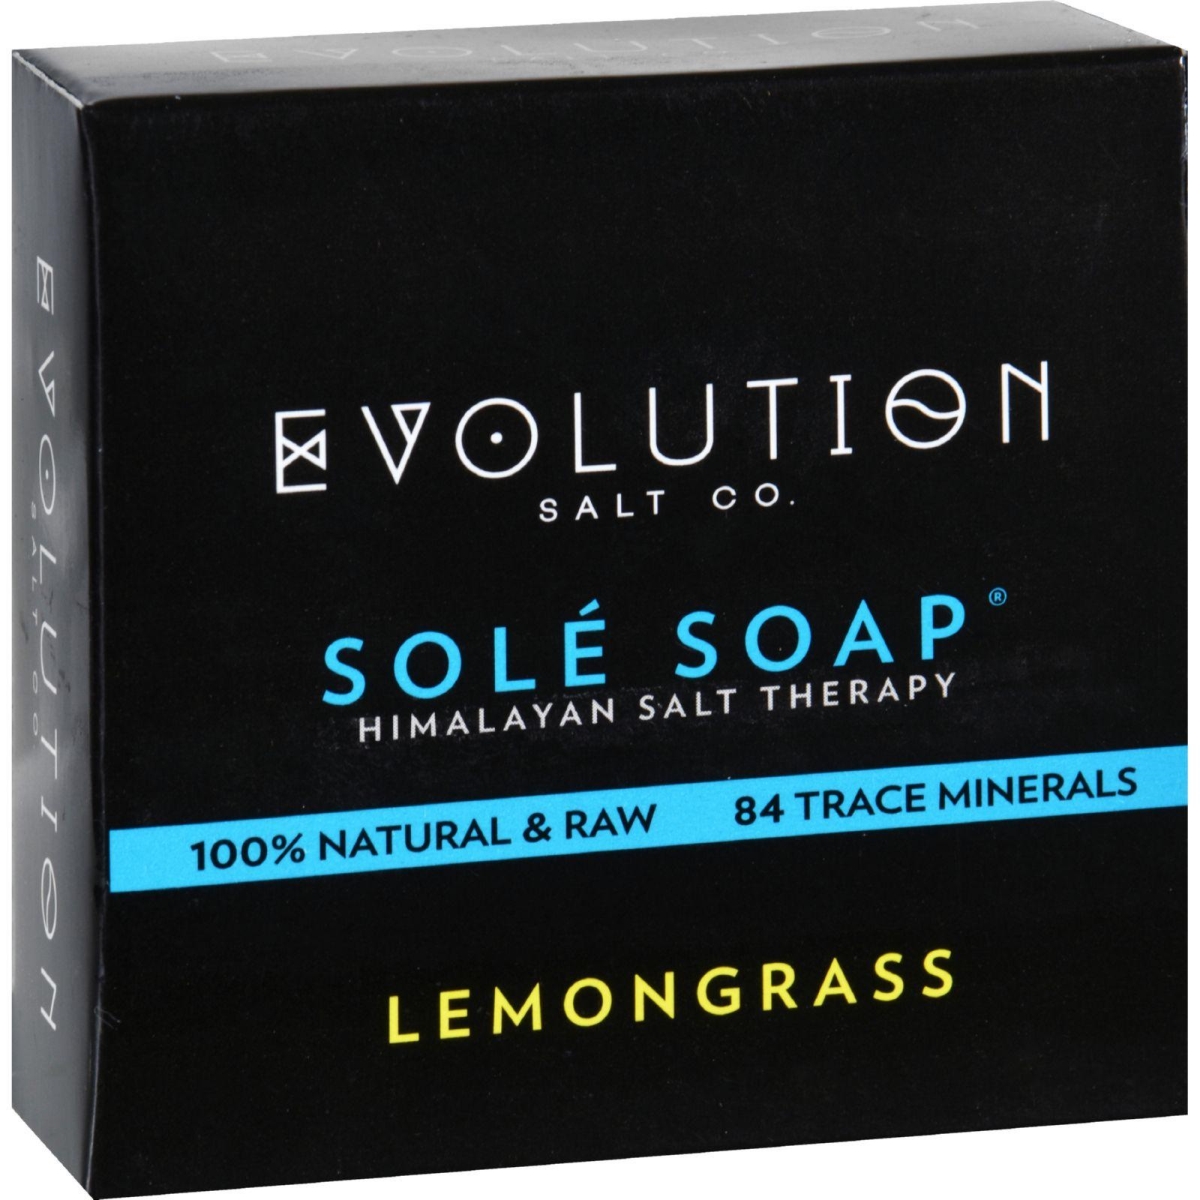 Hg1702281 4.5 Oz Sole Bath Soap, Lemongrass